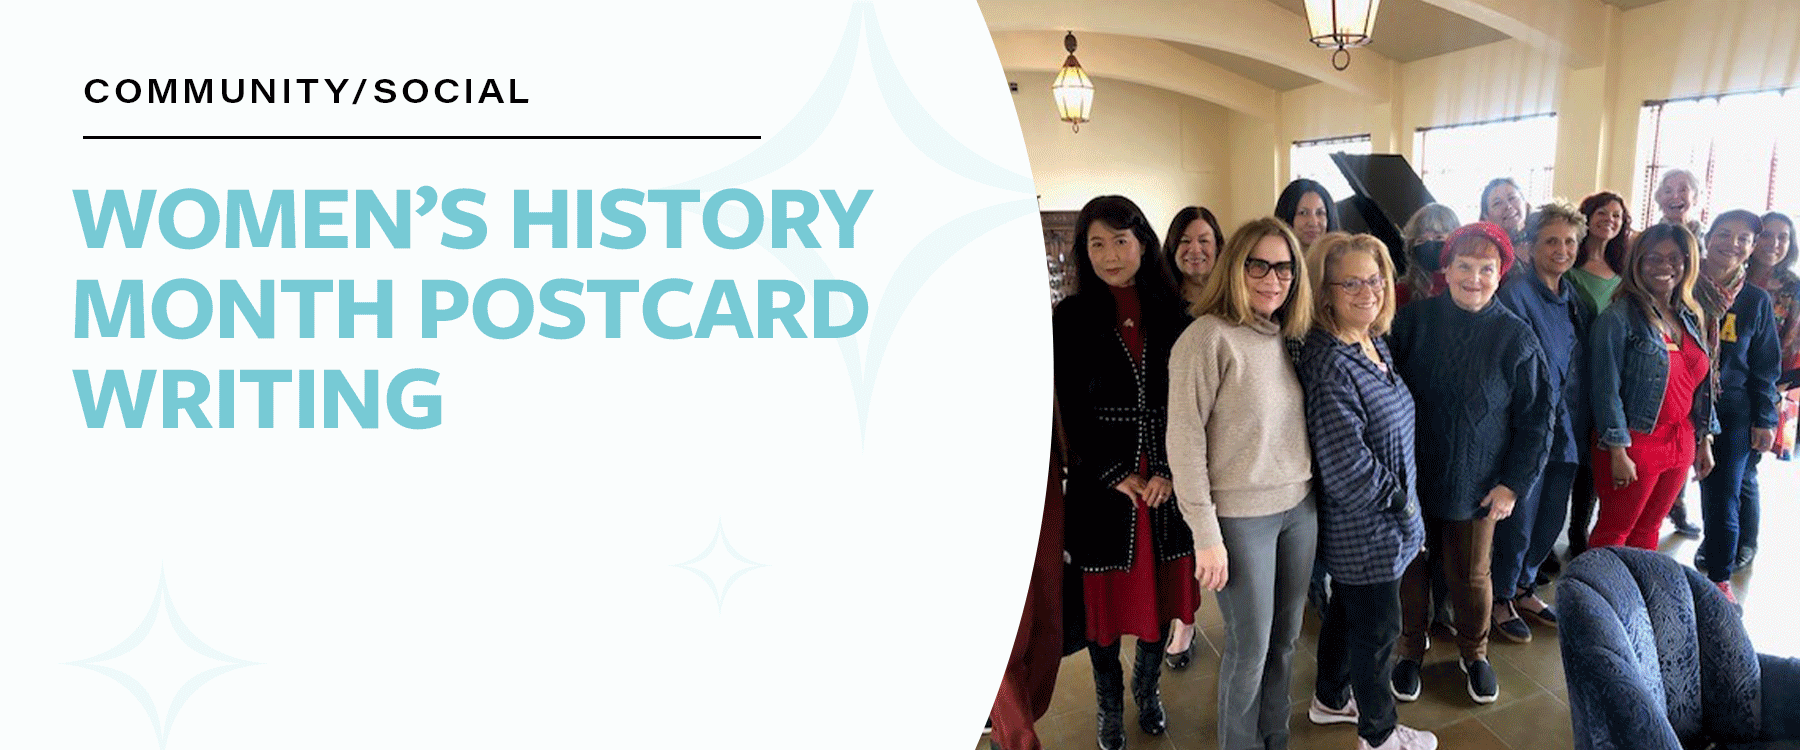 Women's History Month Postcard Writing